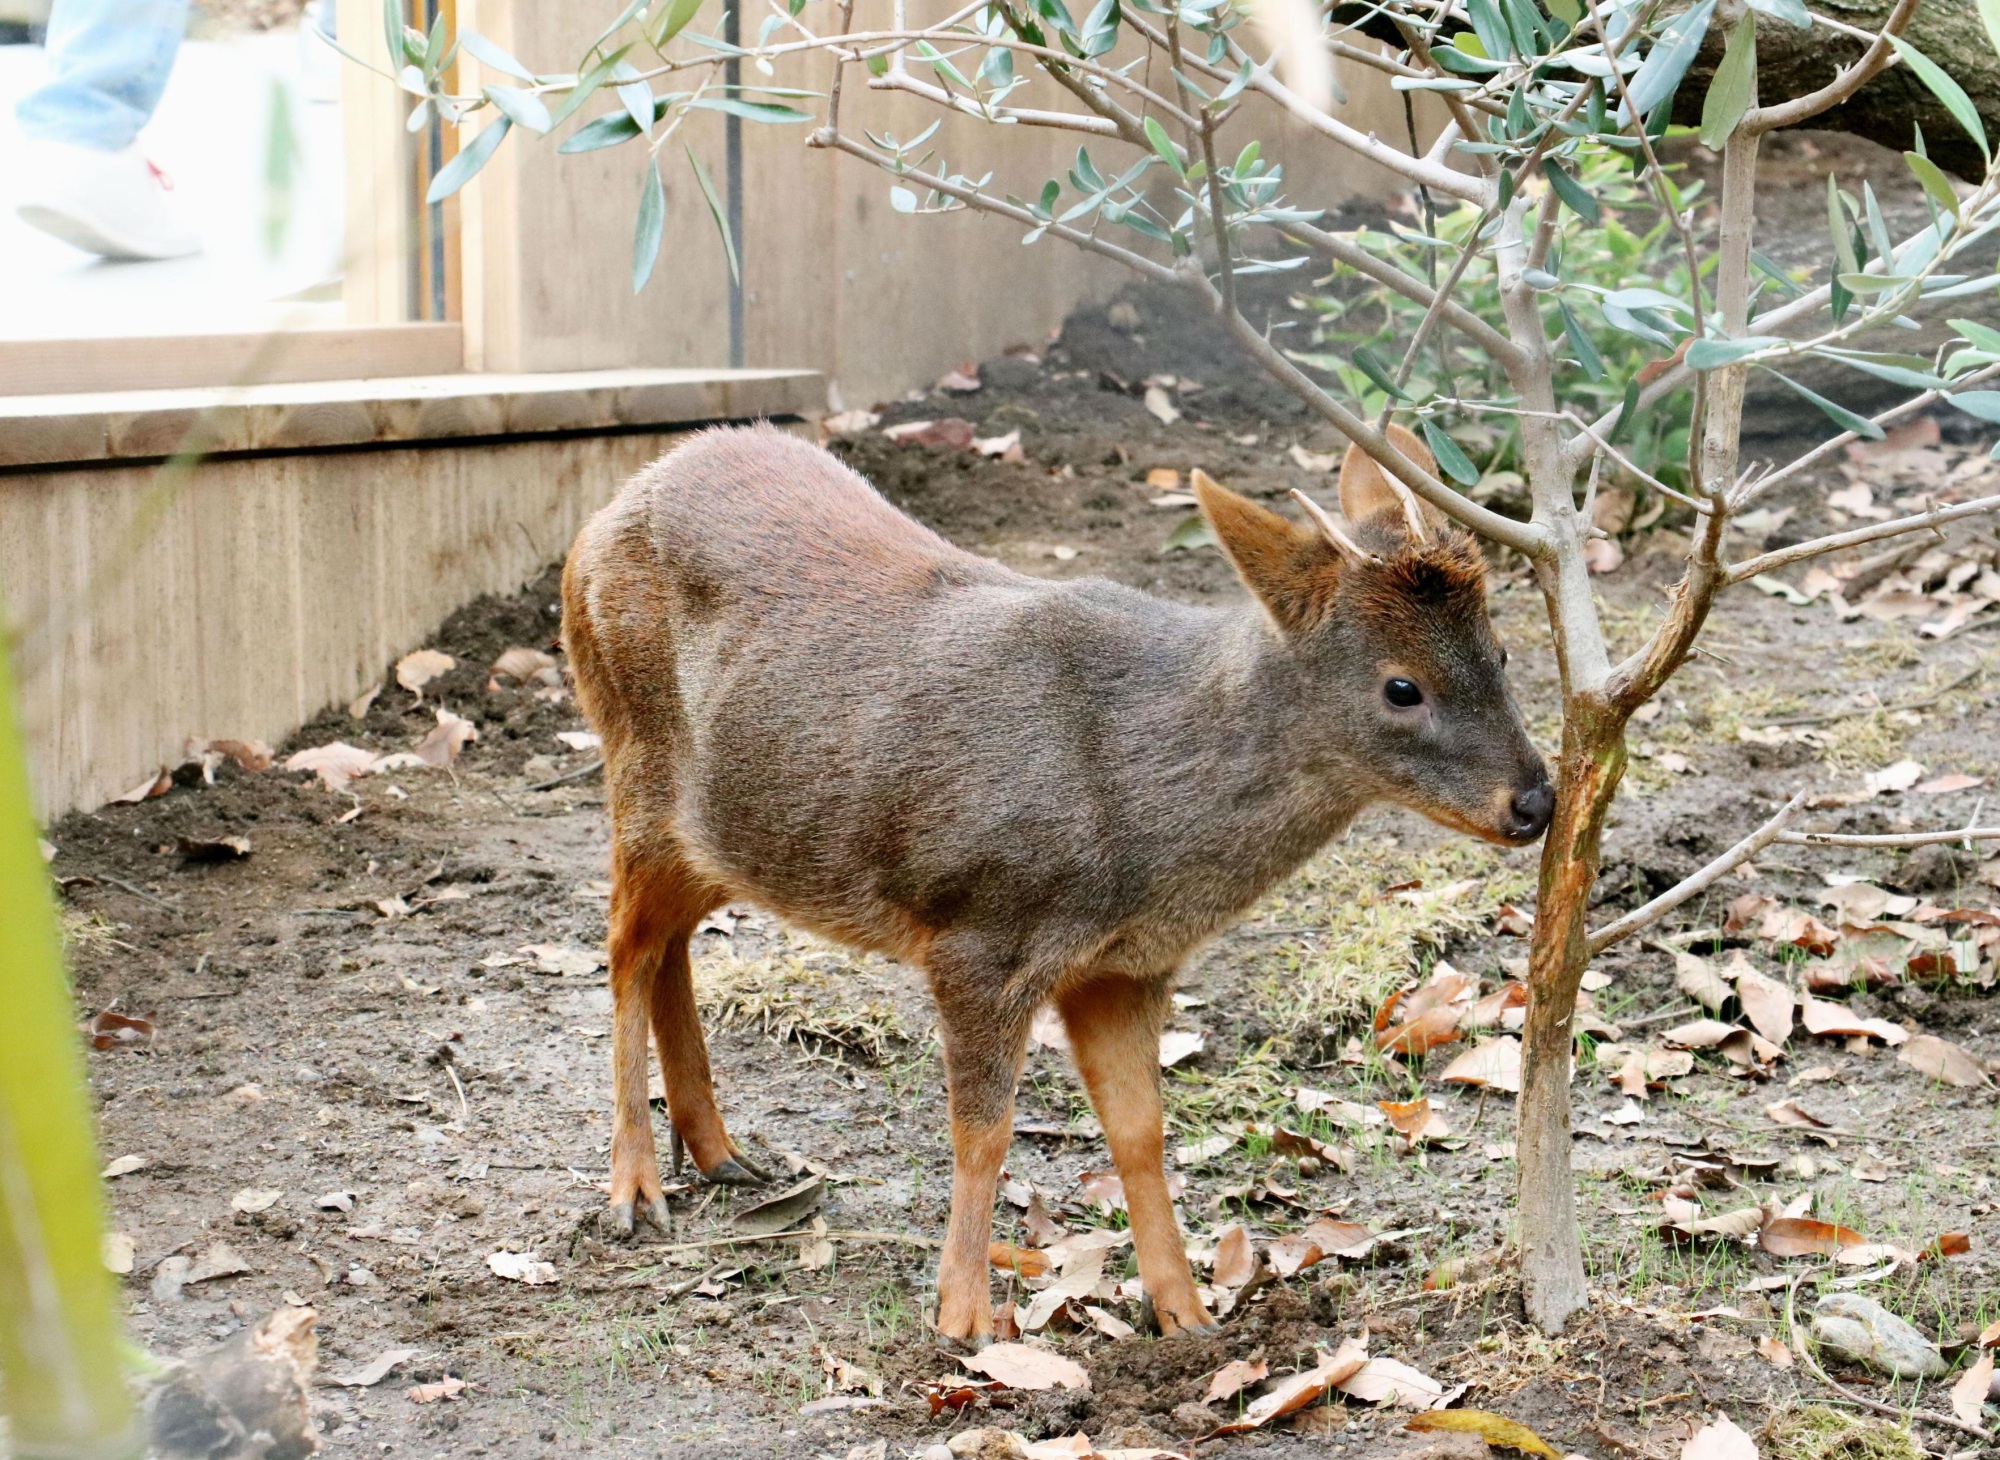 World's smallest deer makes debut at Saitama zoo | The Japan Times